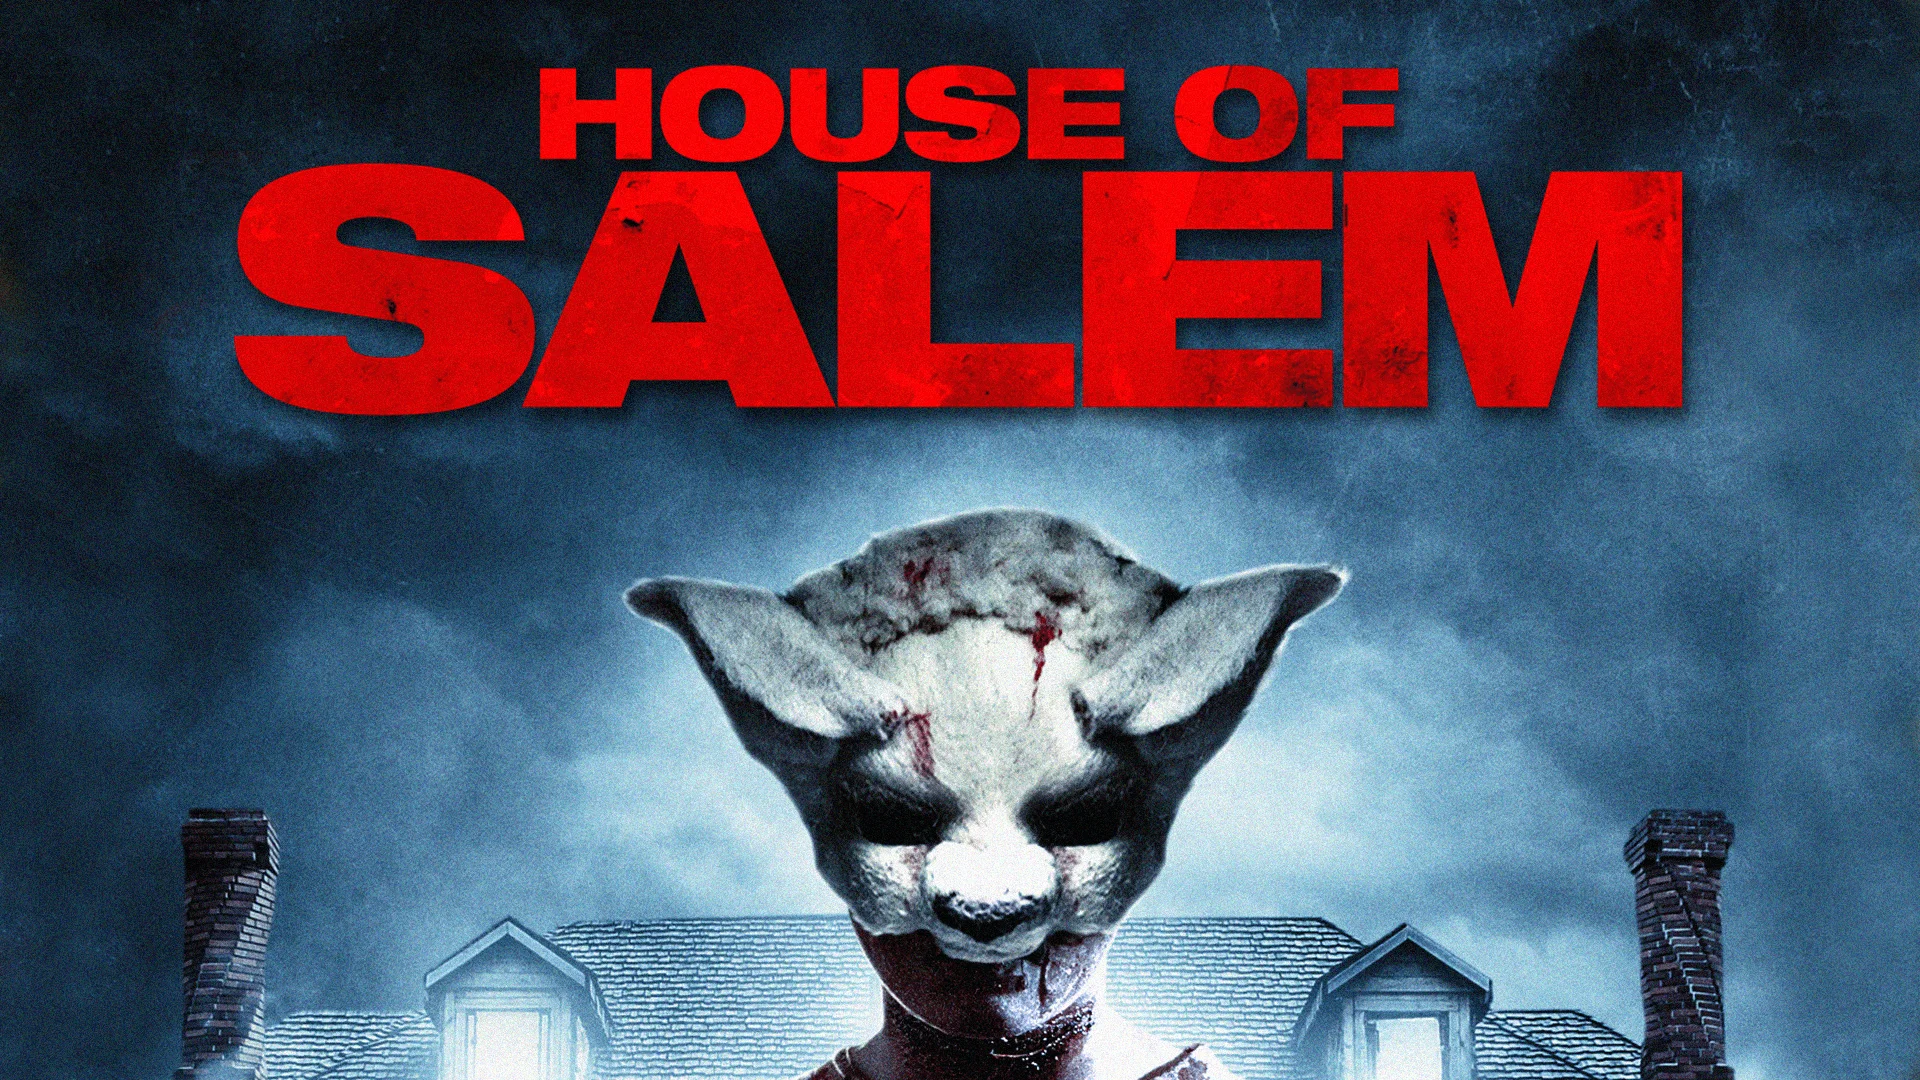 Town of Salem 2 - trailer on Vimeo